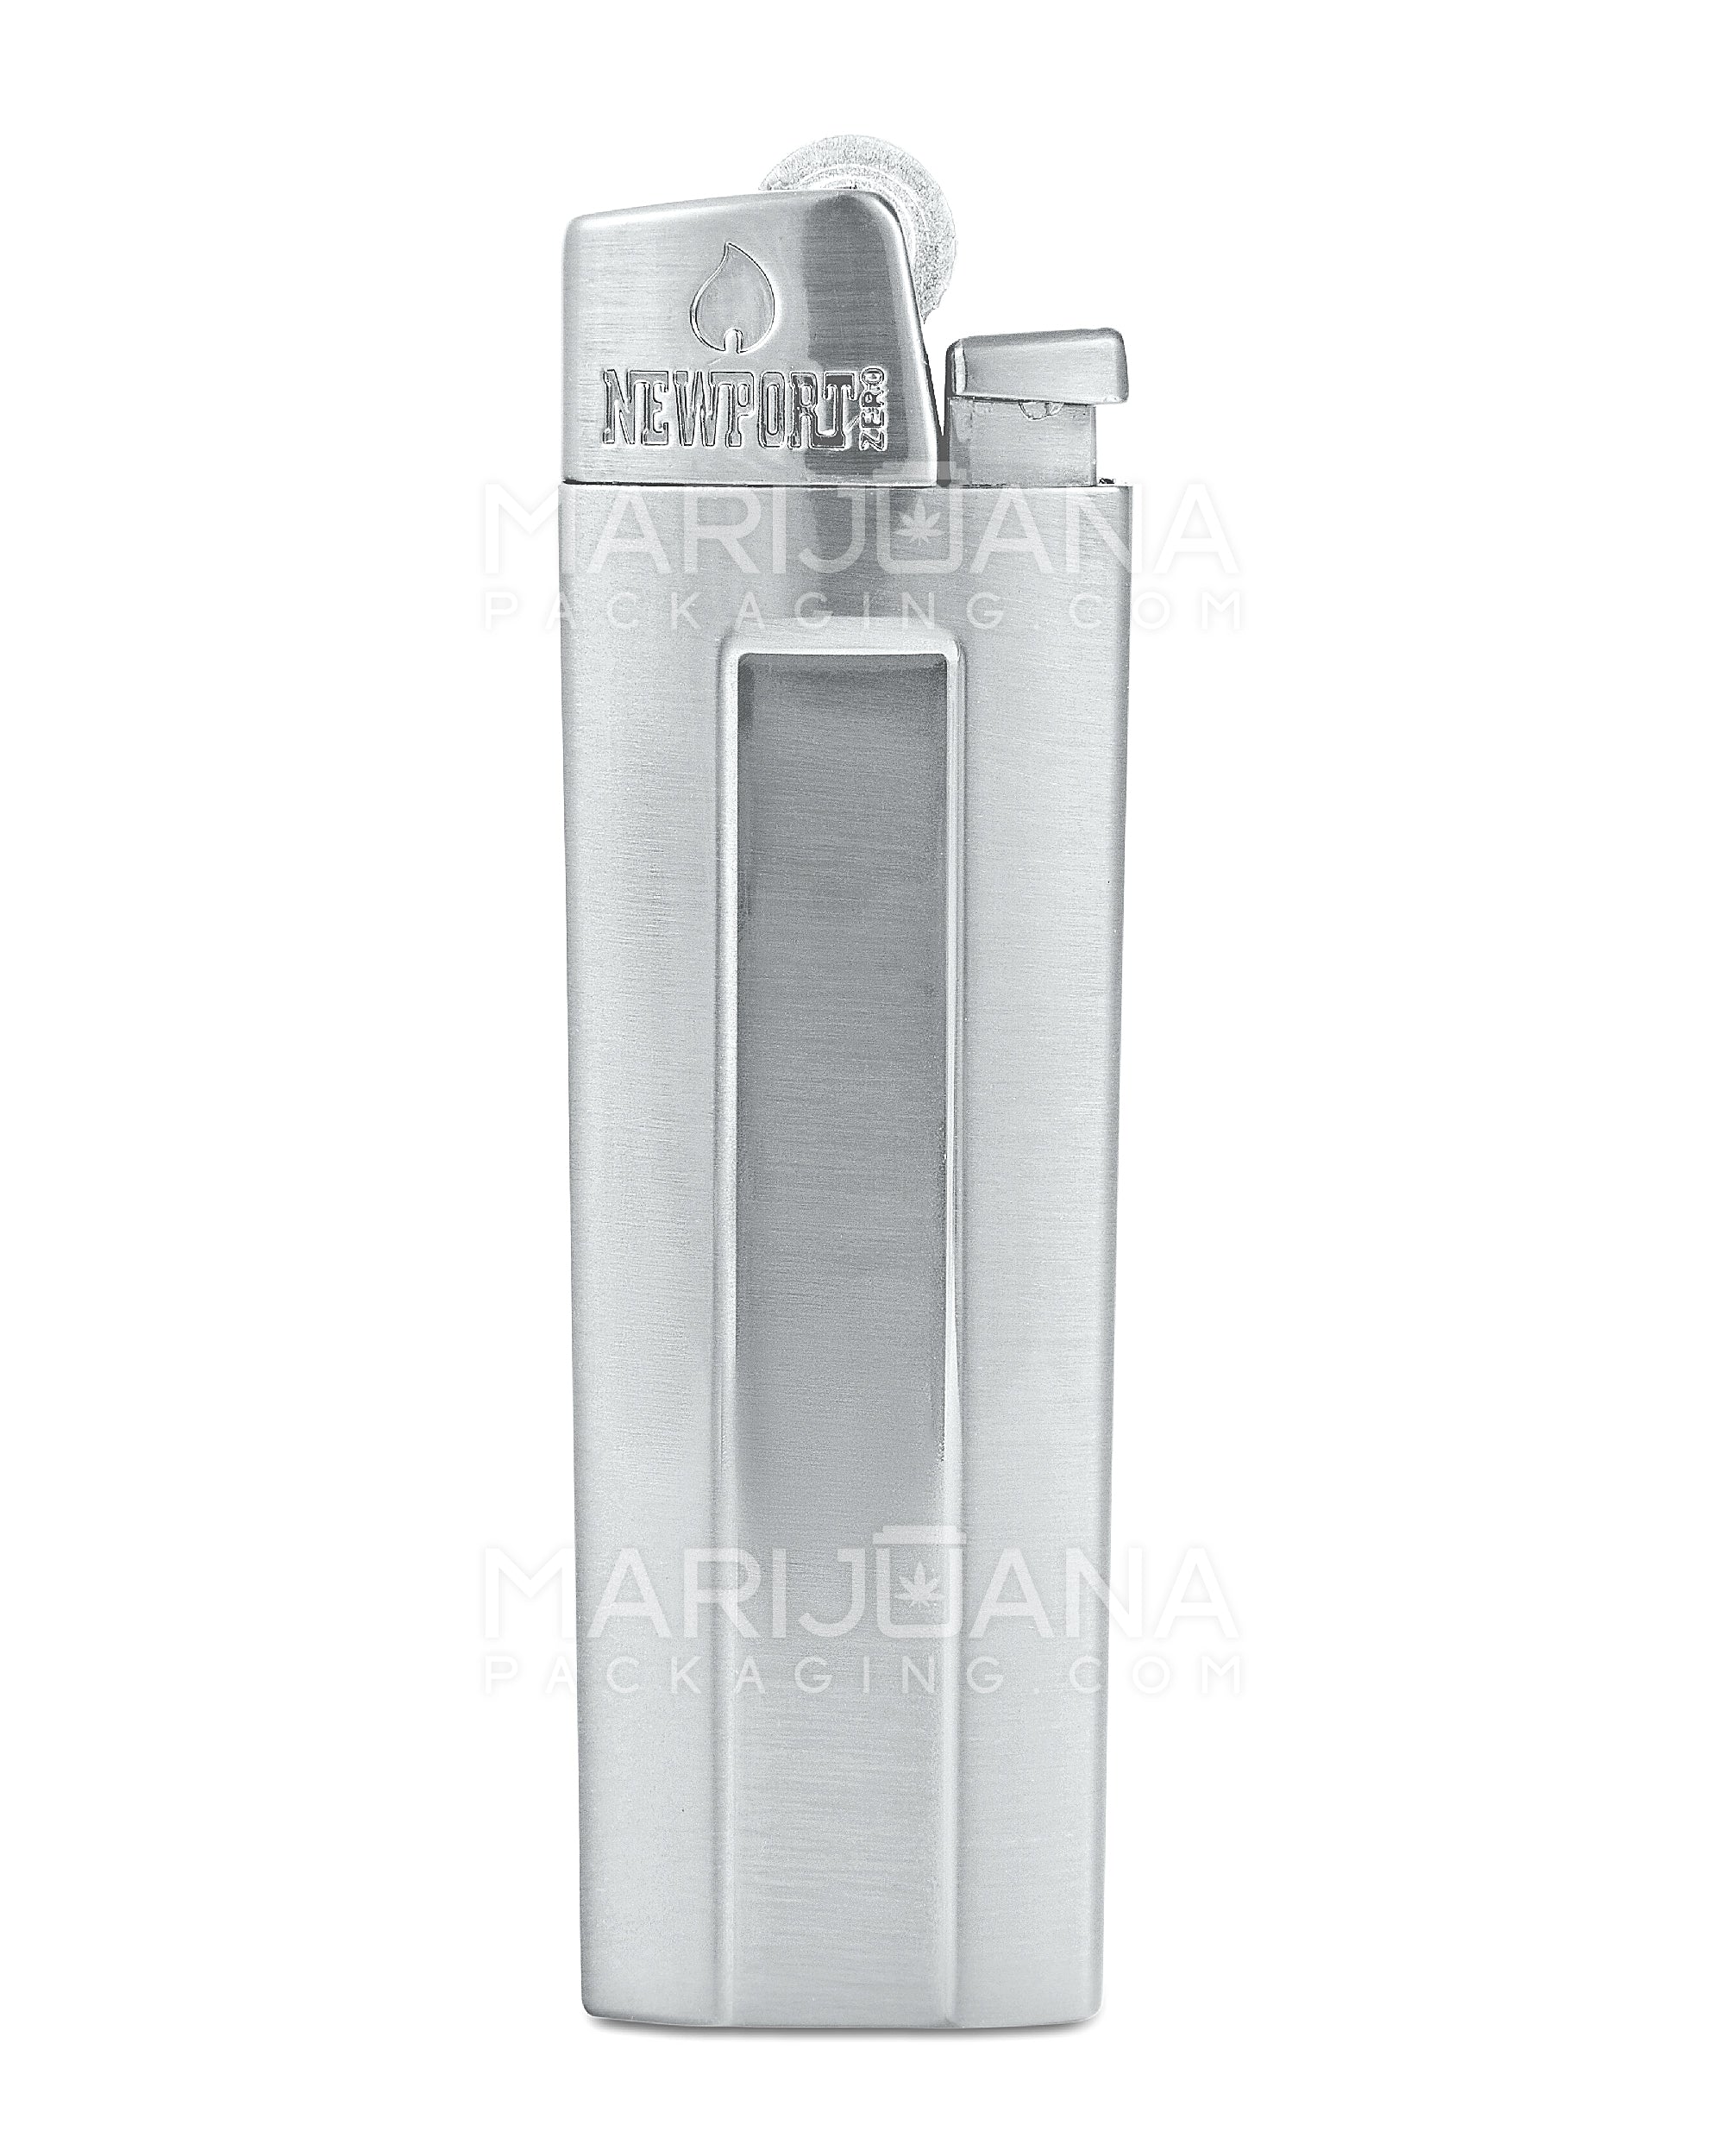 NEWPORT | 'Retail Display' Zero Assorted Metal Cigar Torch Lighter | 3in Tall - Butane - 12 Count - 7